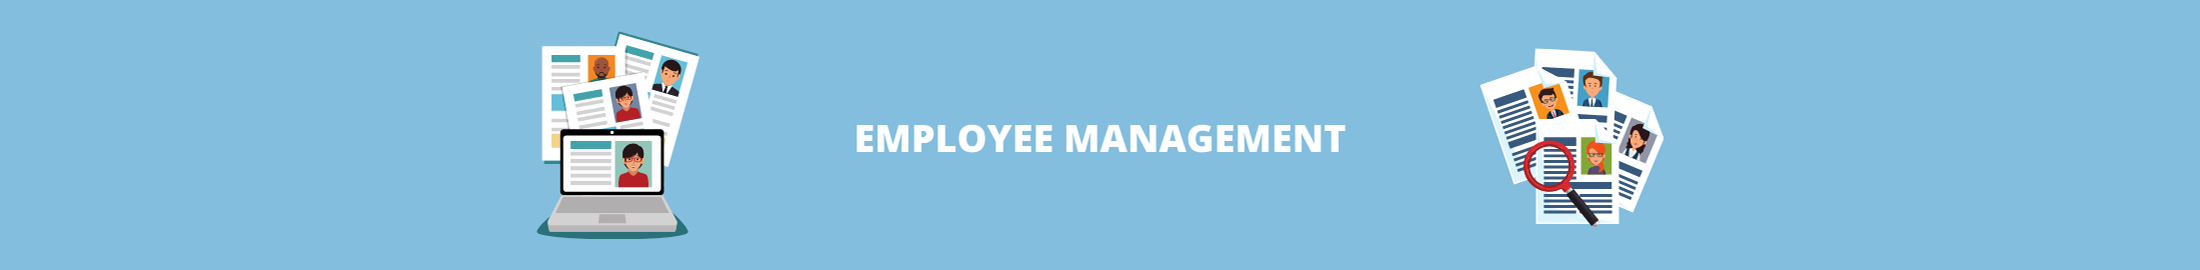 Employee Management Banner